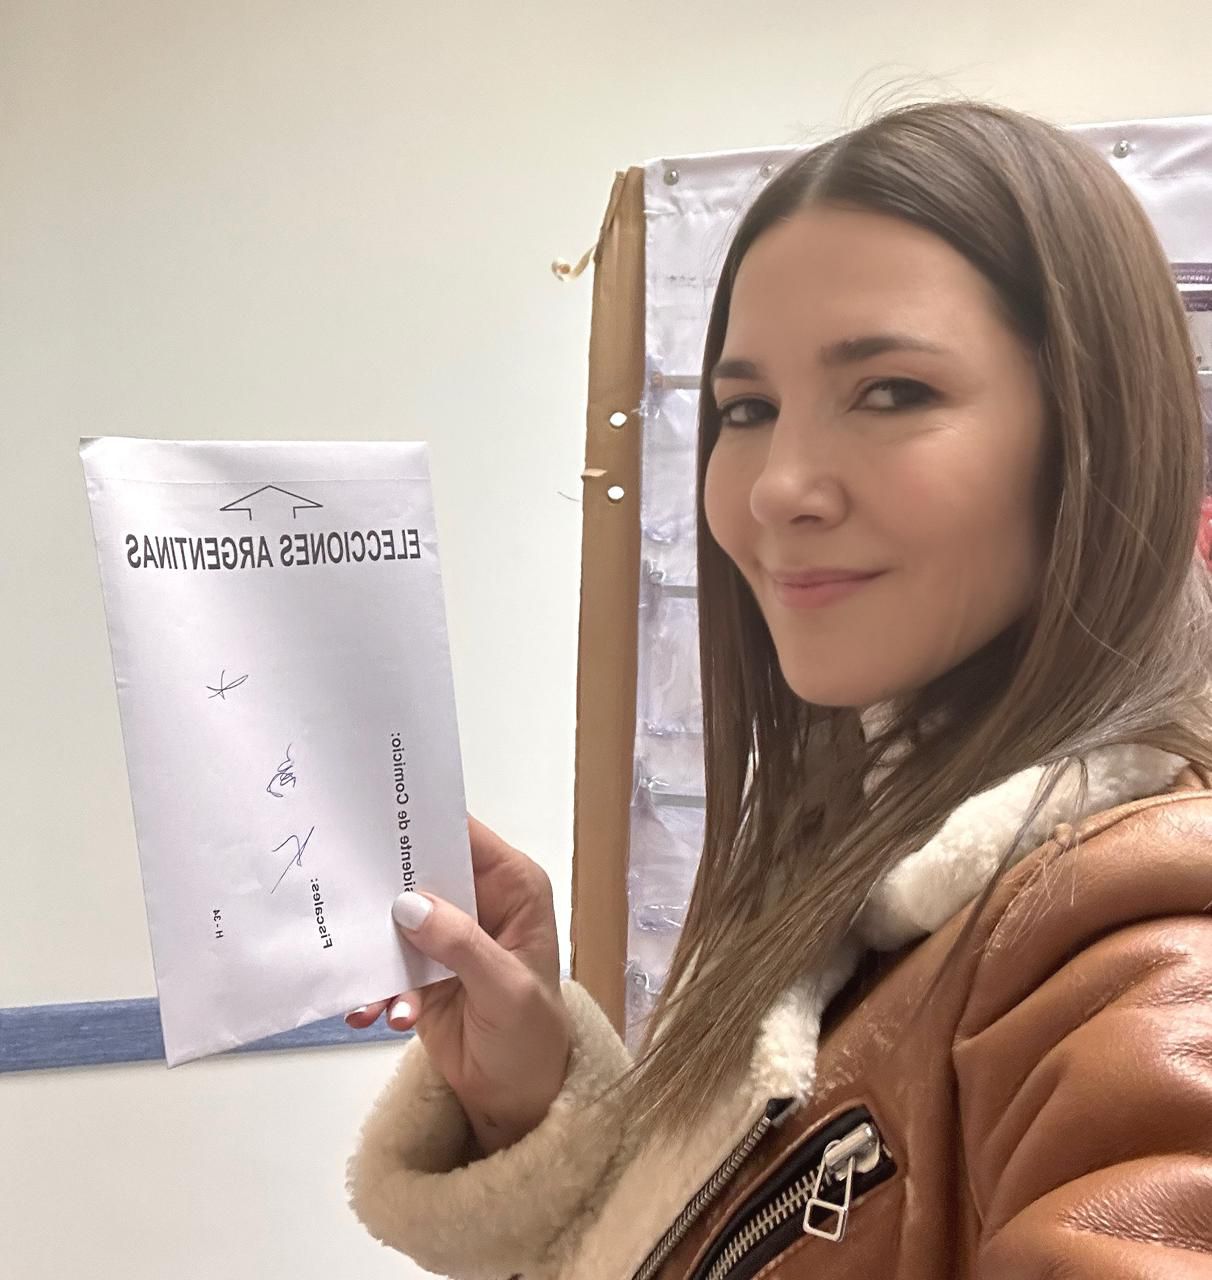 Cristina Pérez cast her vote (Photo: Instagram)